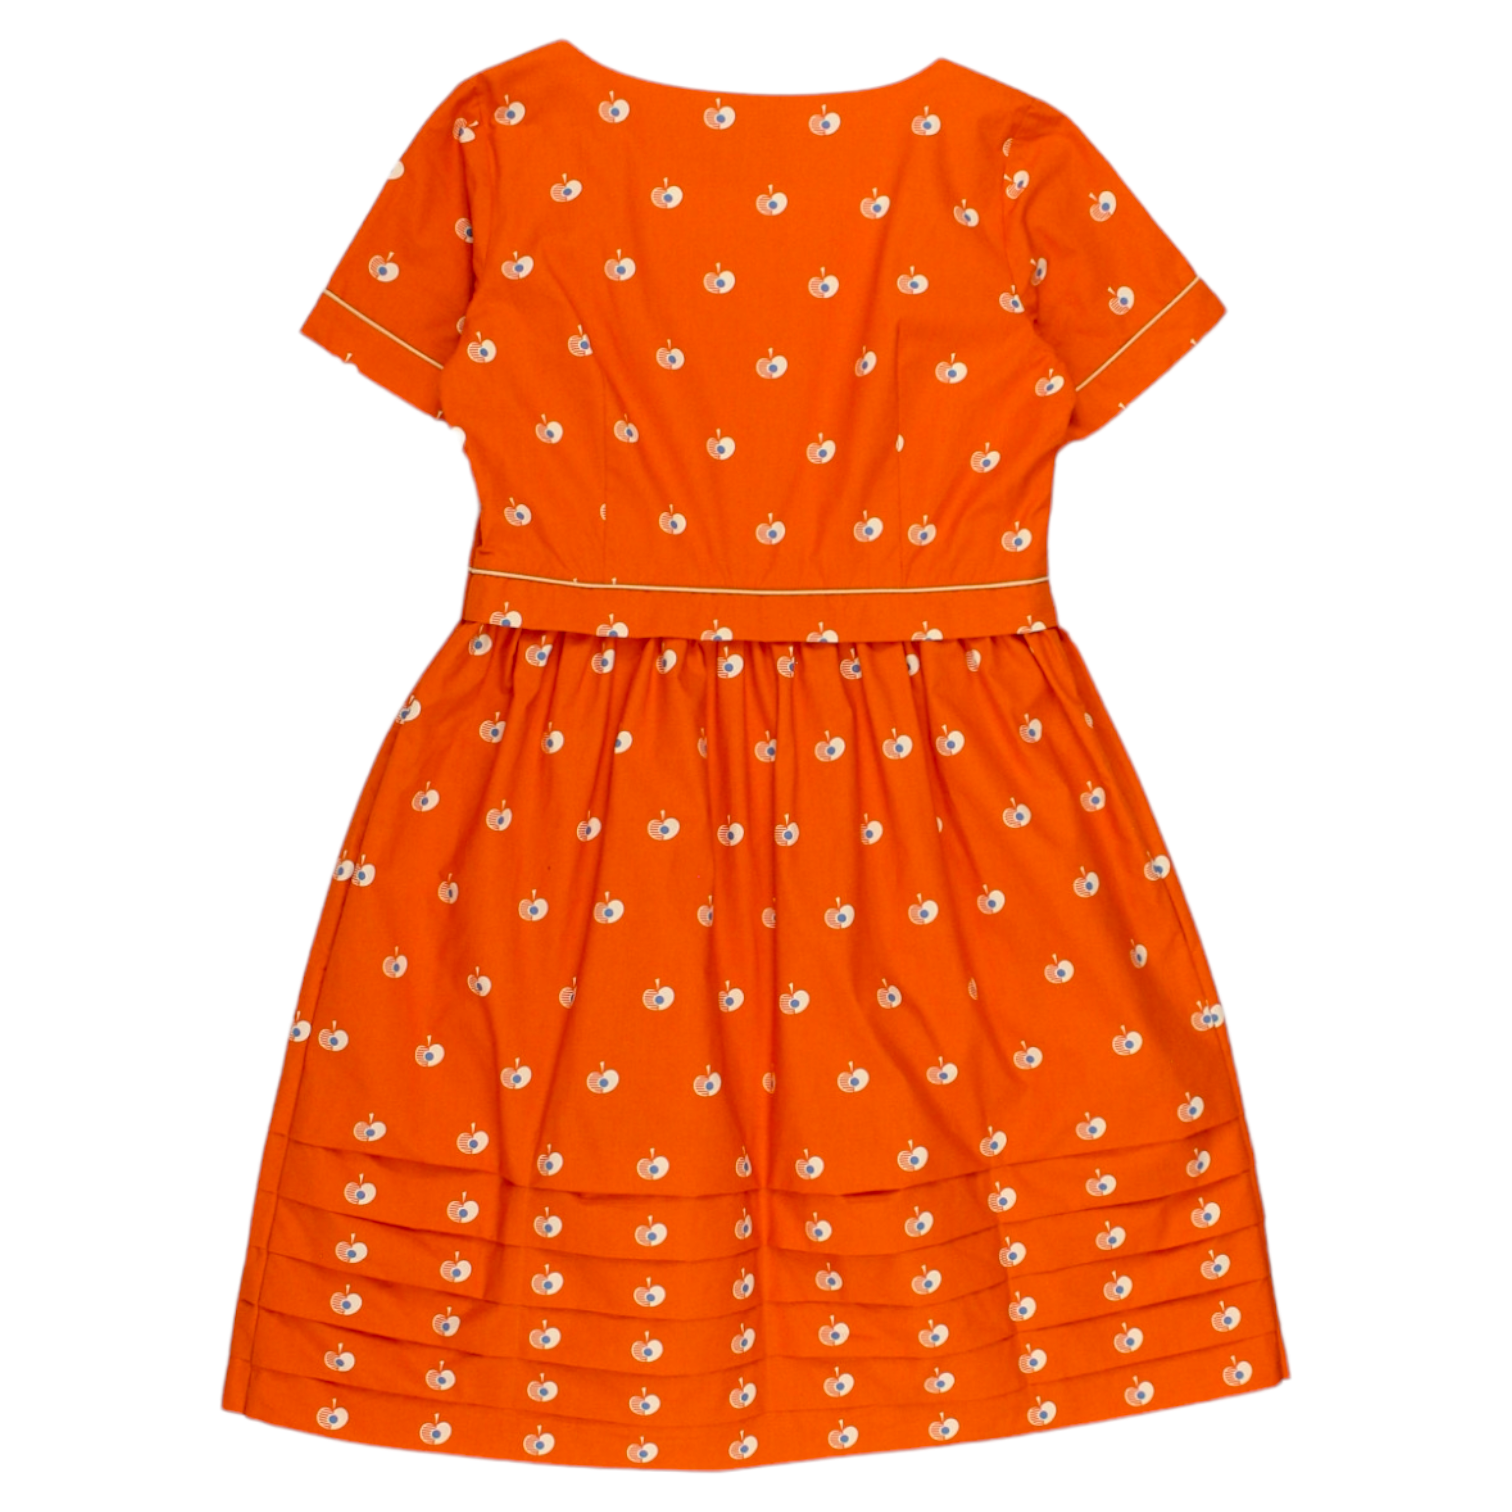 Orla Kiely Orange Apple Print Dress